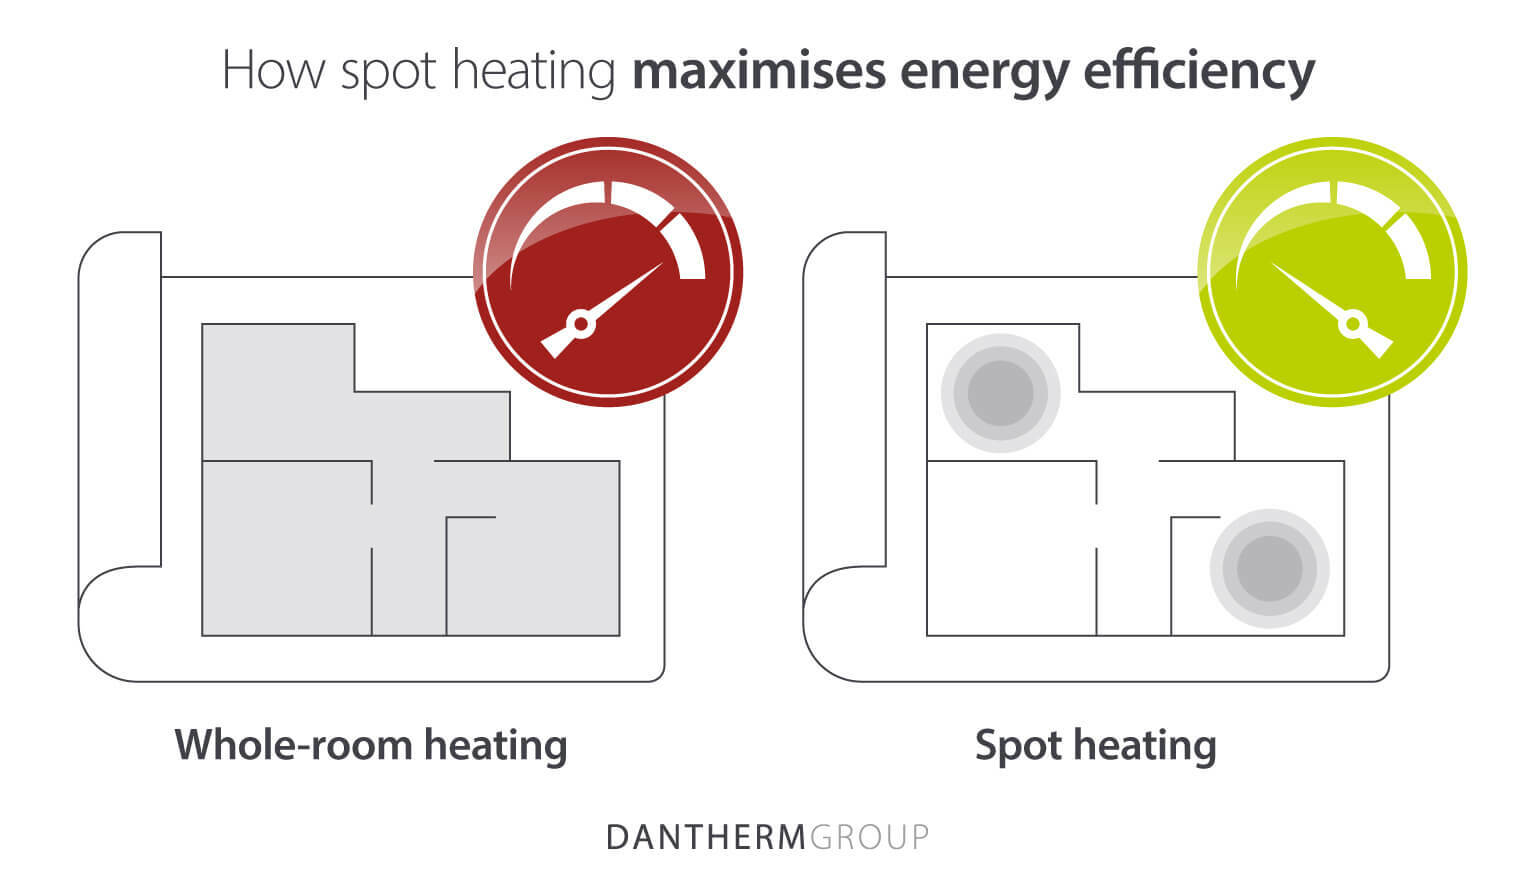 How spot heating maximises energy efficiency in large buildings.